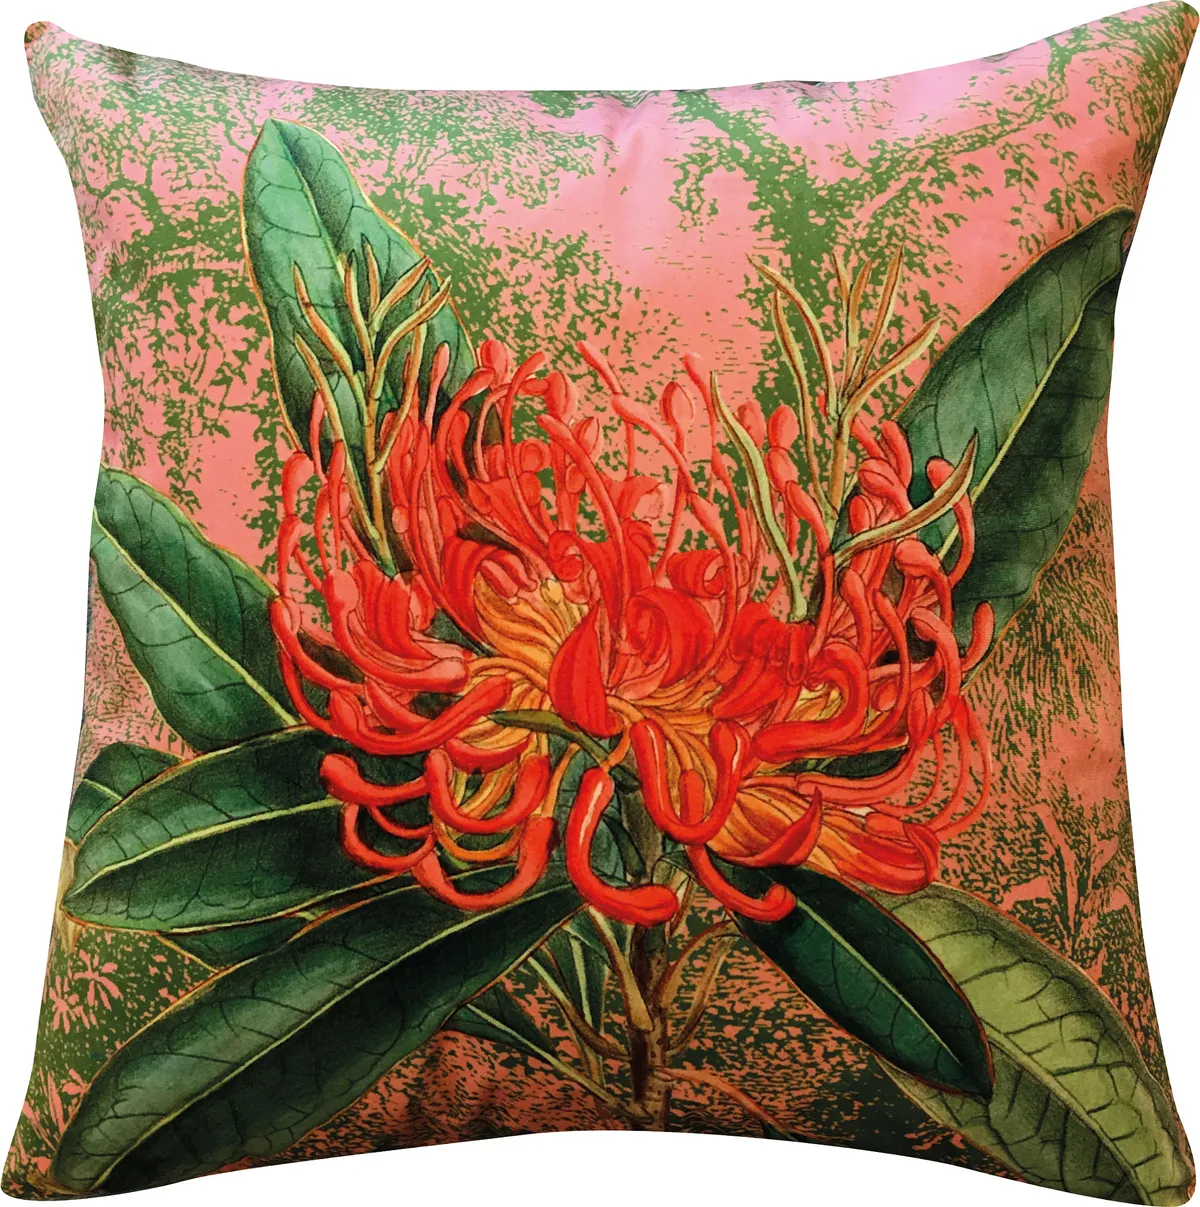 Love Coral velvet cushion cover, £35.95, Audenza